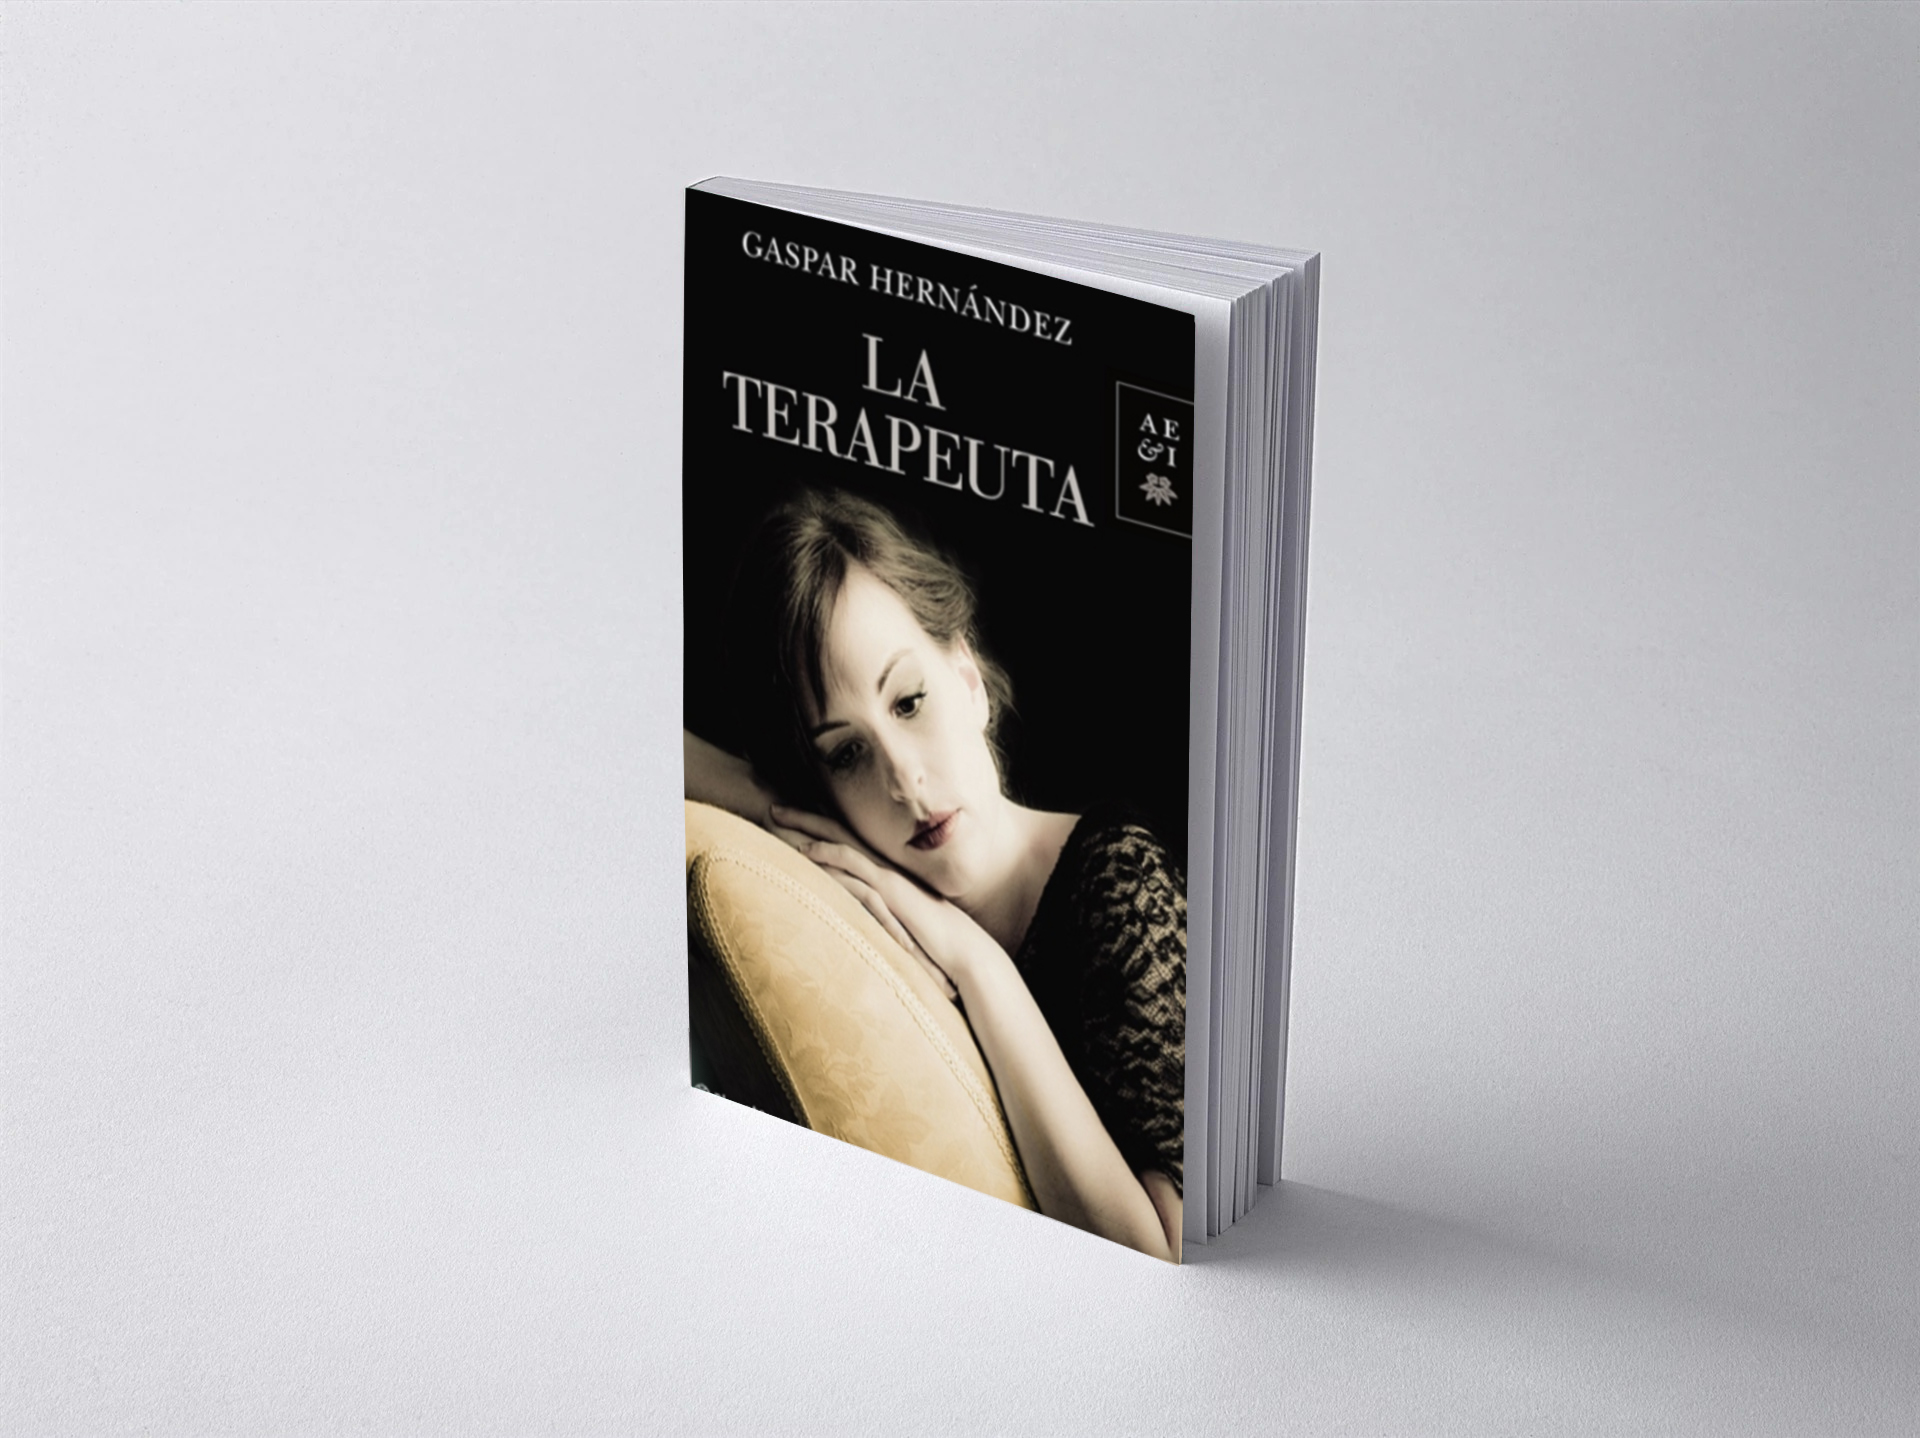 gaspar-hernandez-la-terapeuta-book-cover.jpg